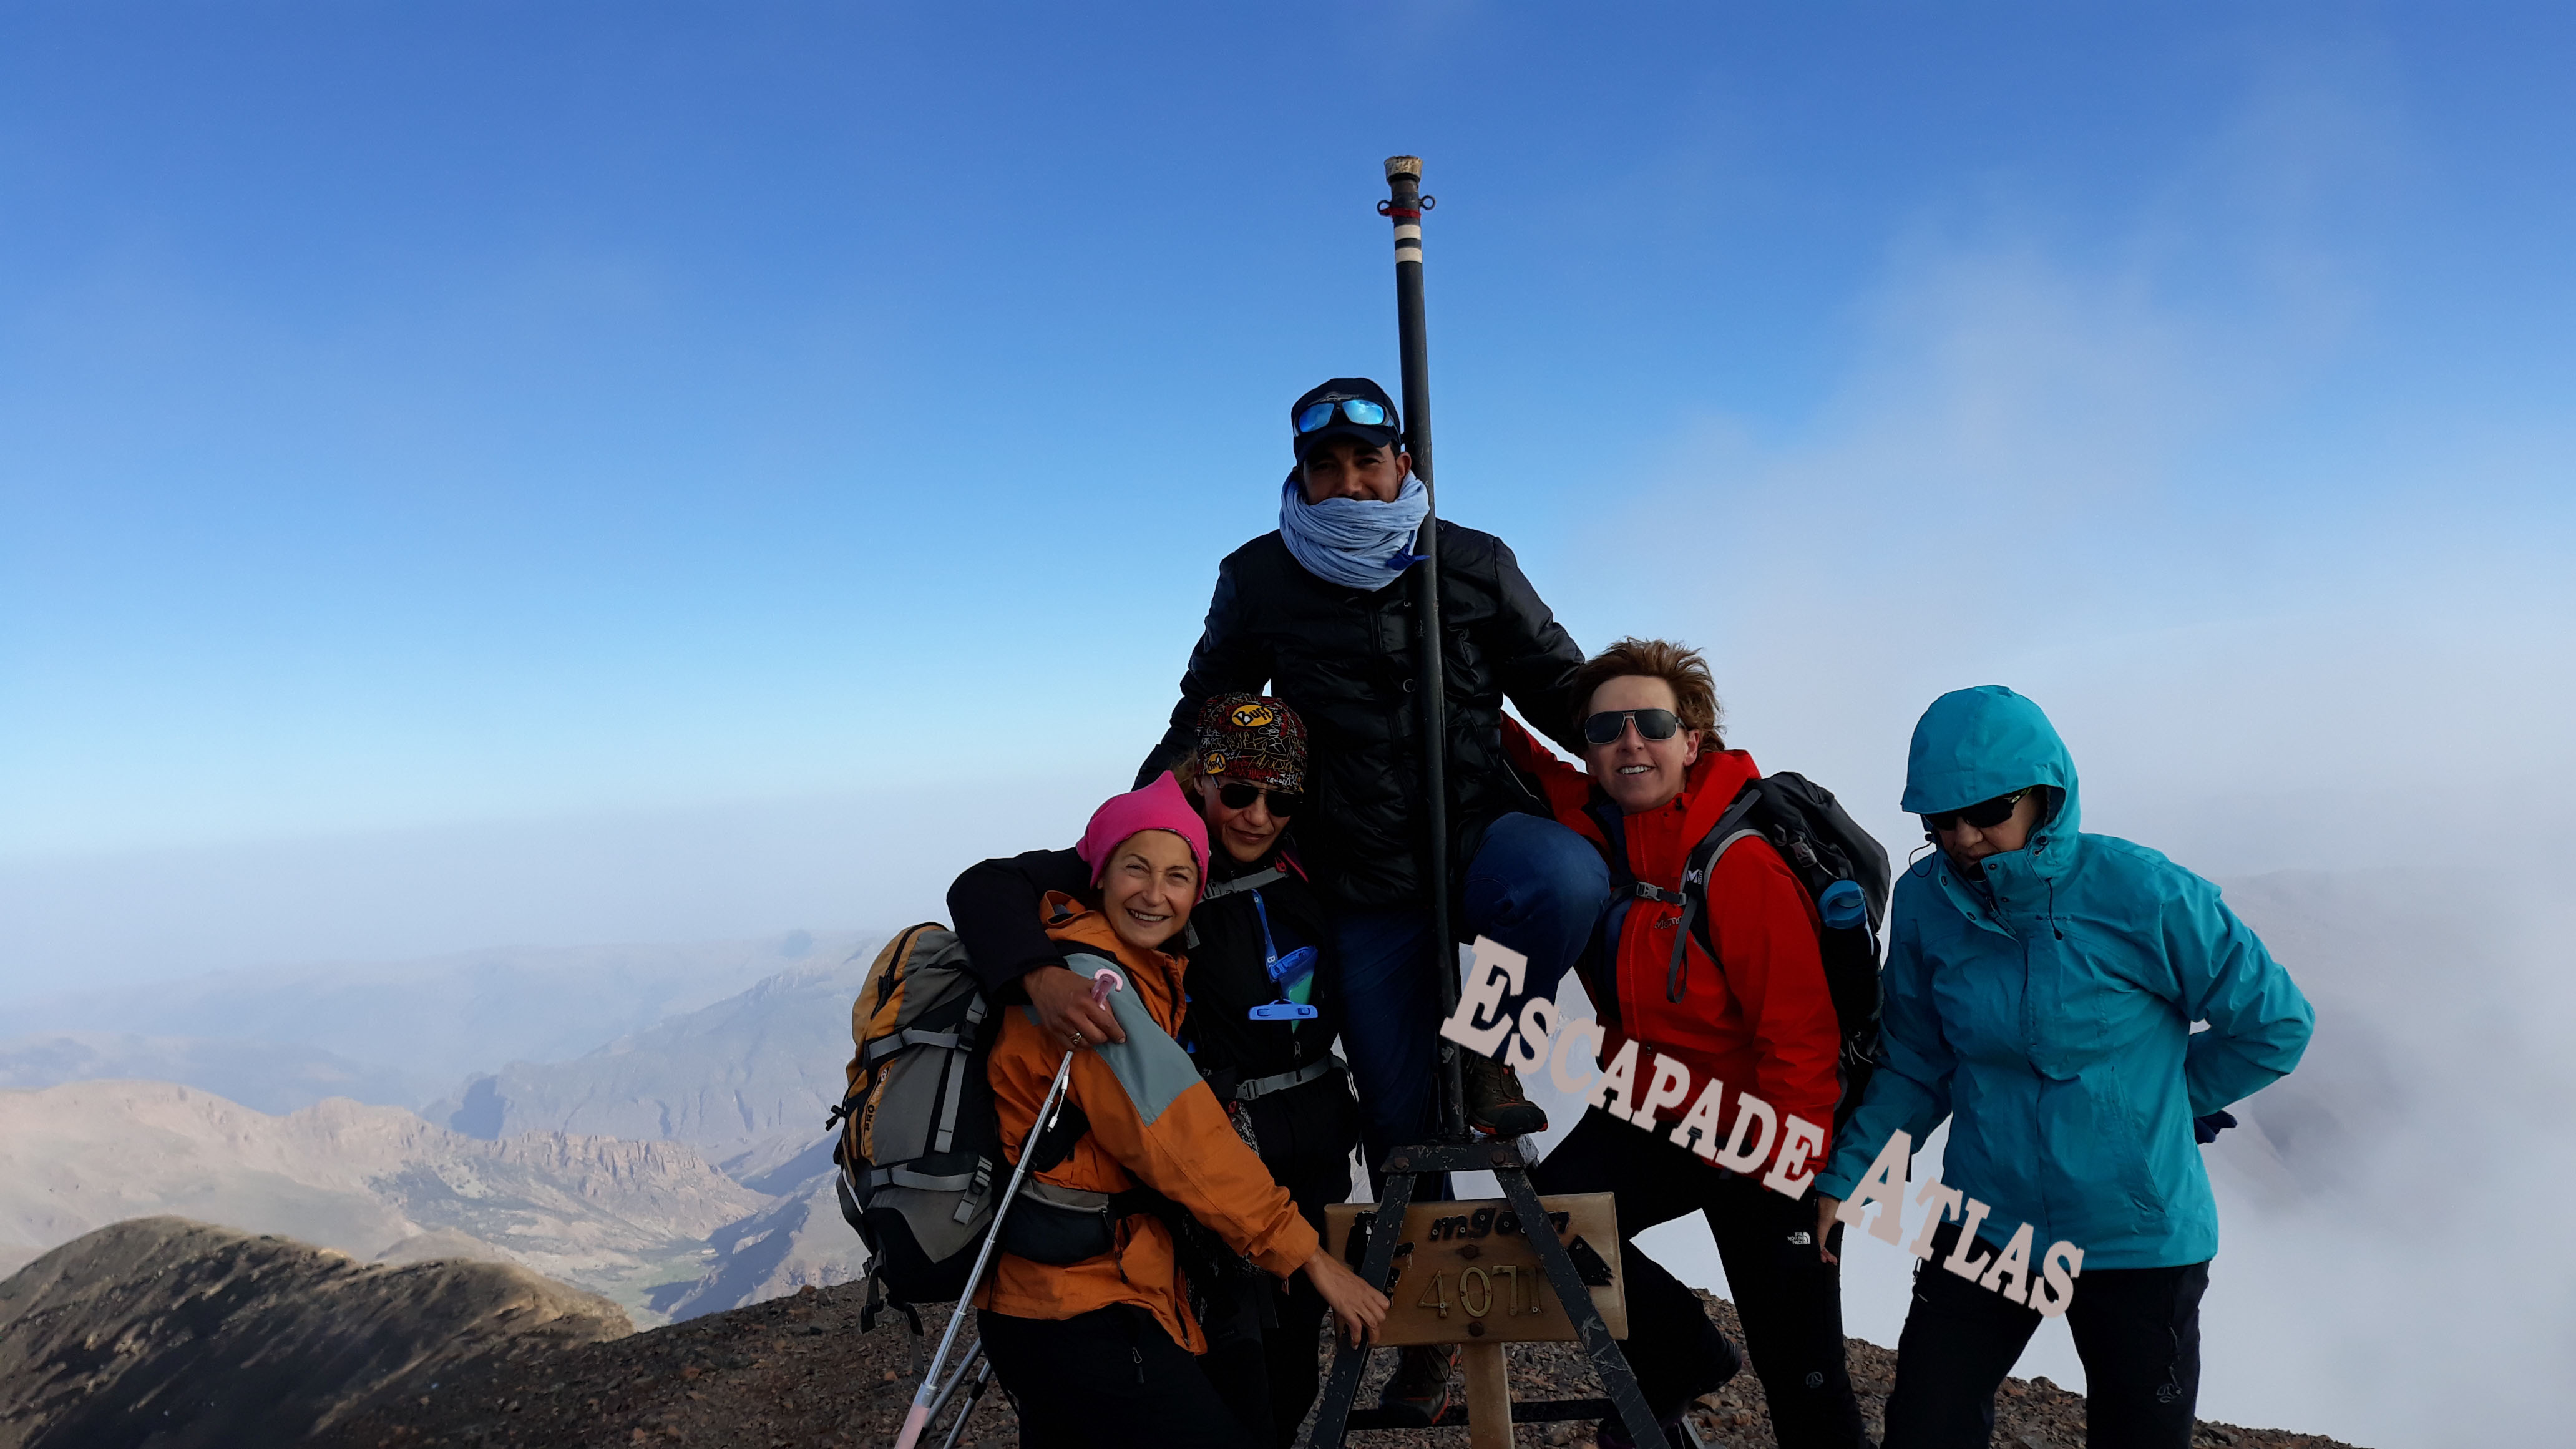 M'goun summit 4071 m